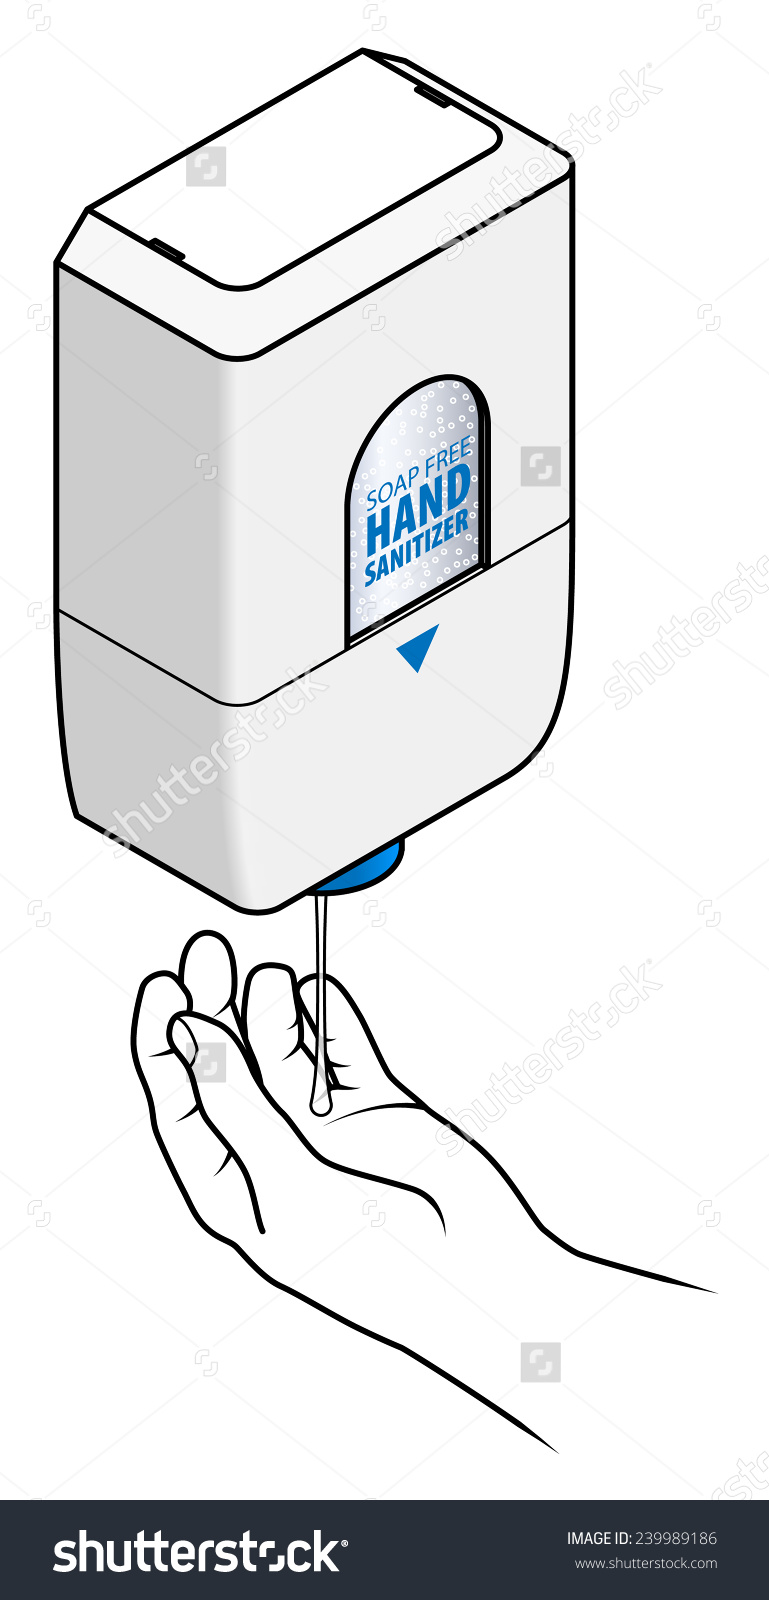 Hand Soap Dispenser Clipart.